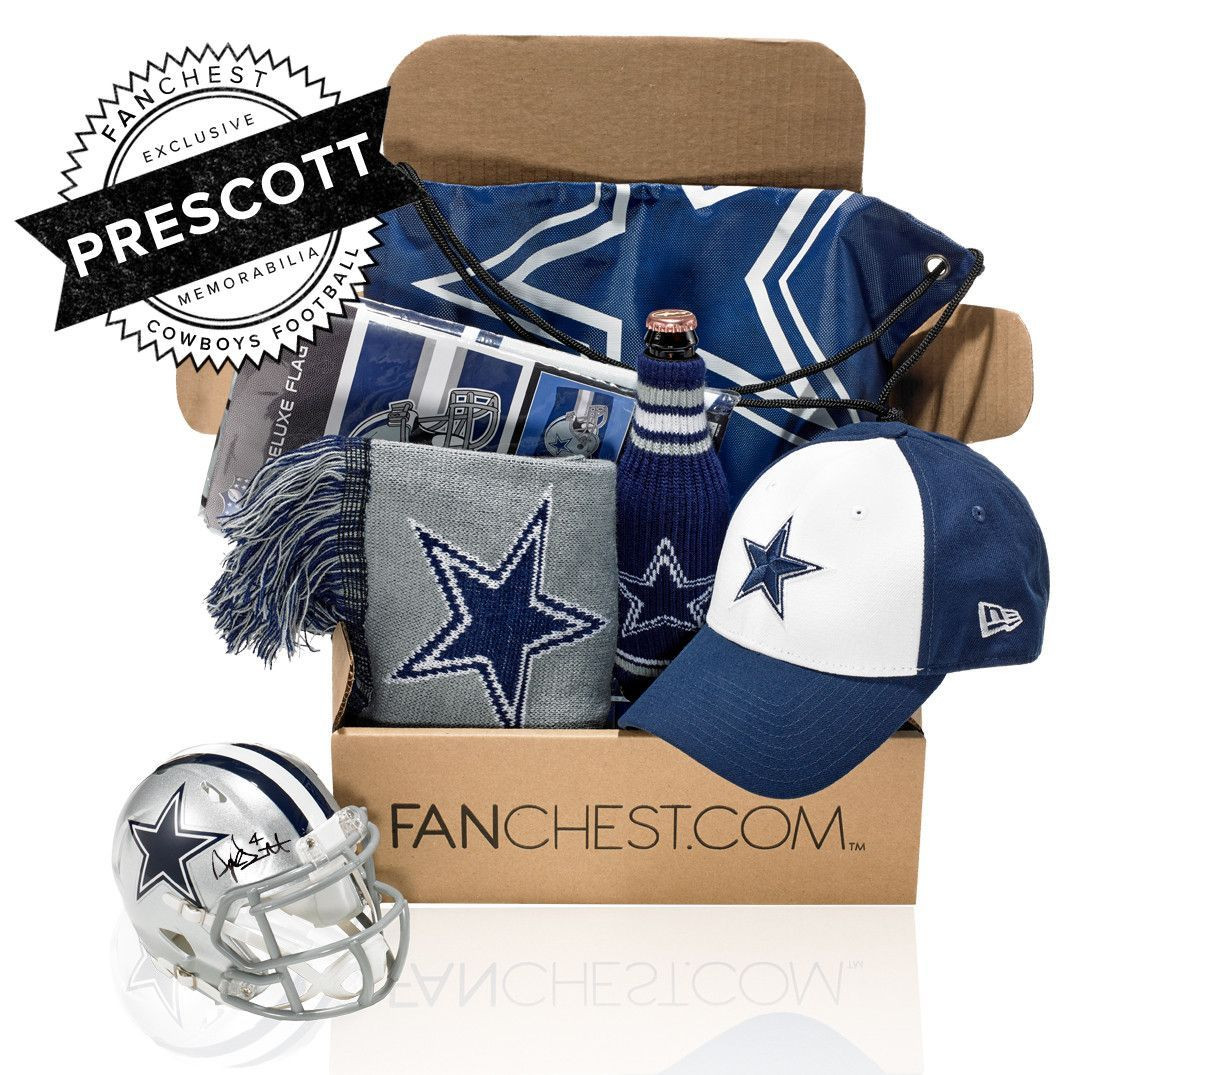 Dallas Cowboys Christmas Gift Ideas
 Pin on Dallas Cowboys Gift Ideas